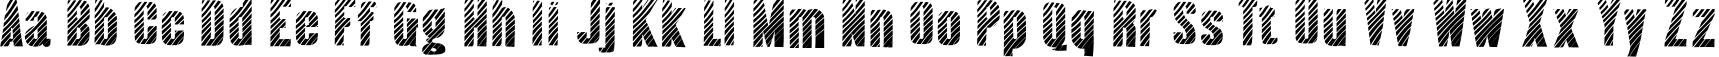 Пример написания английского алфавита шрифтом Almonte Woodgrain